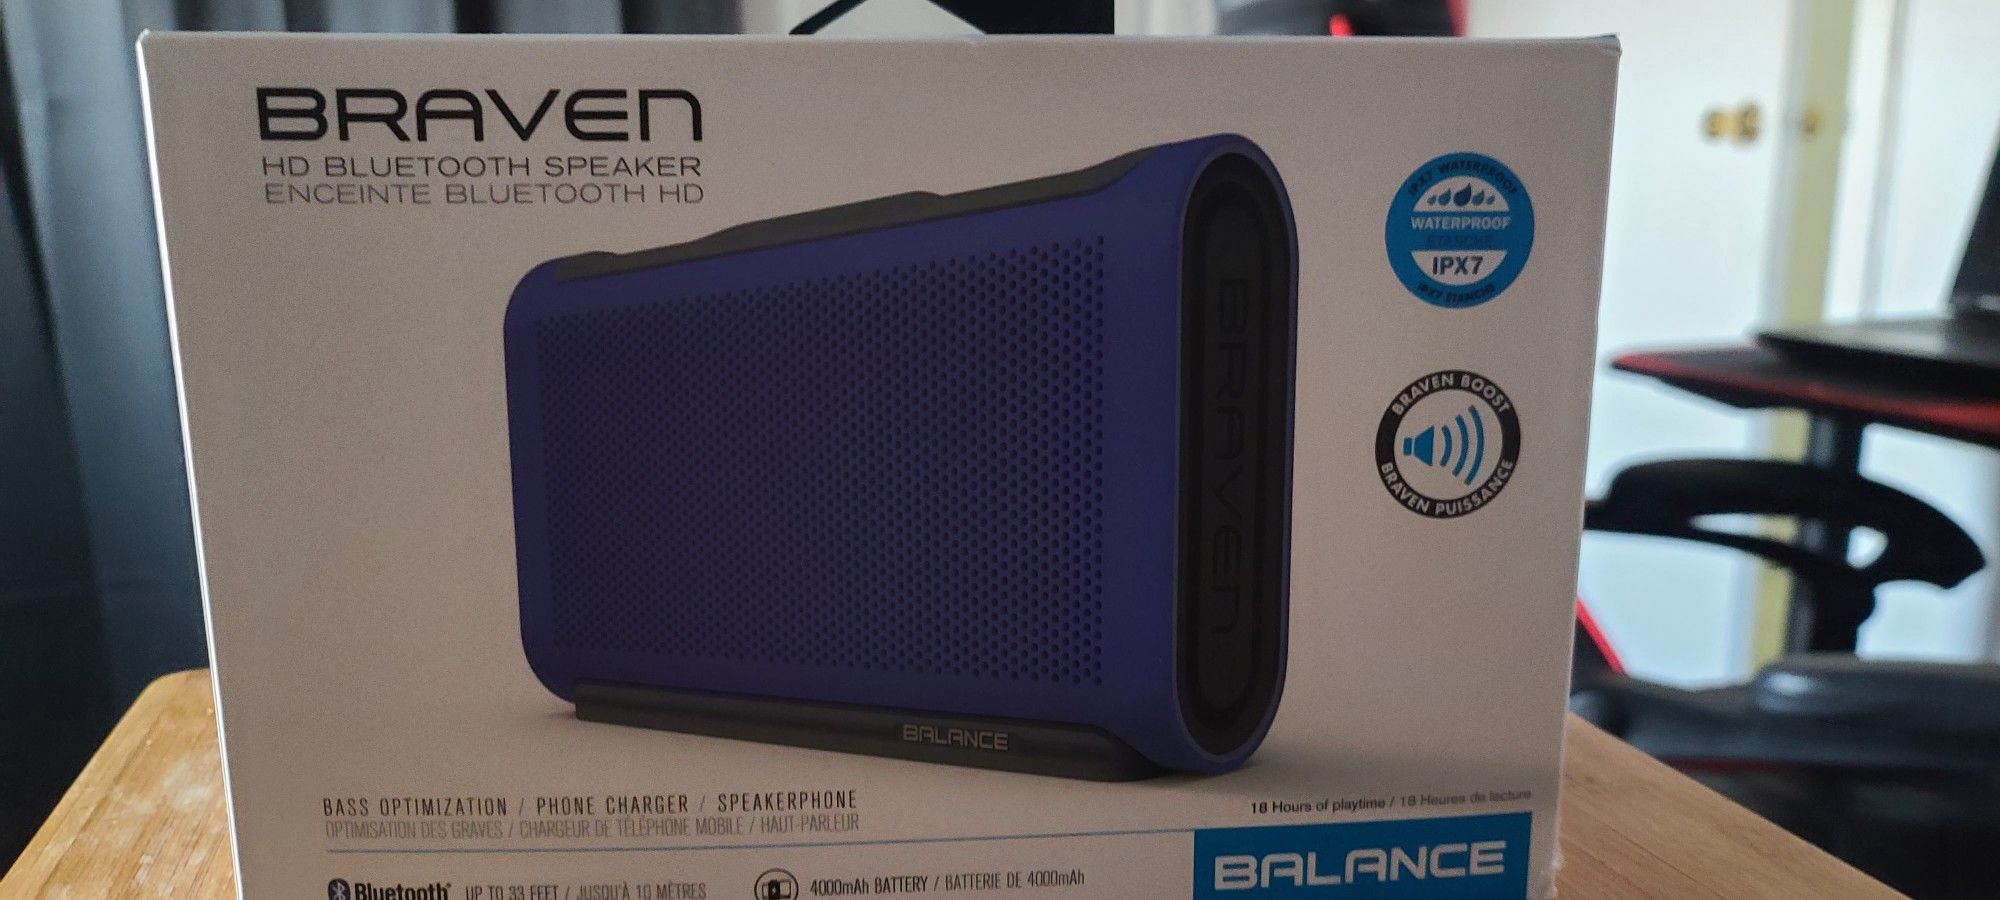 Braven HD Bluetooth Speaker